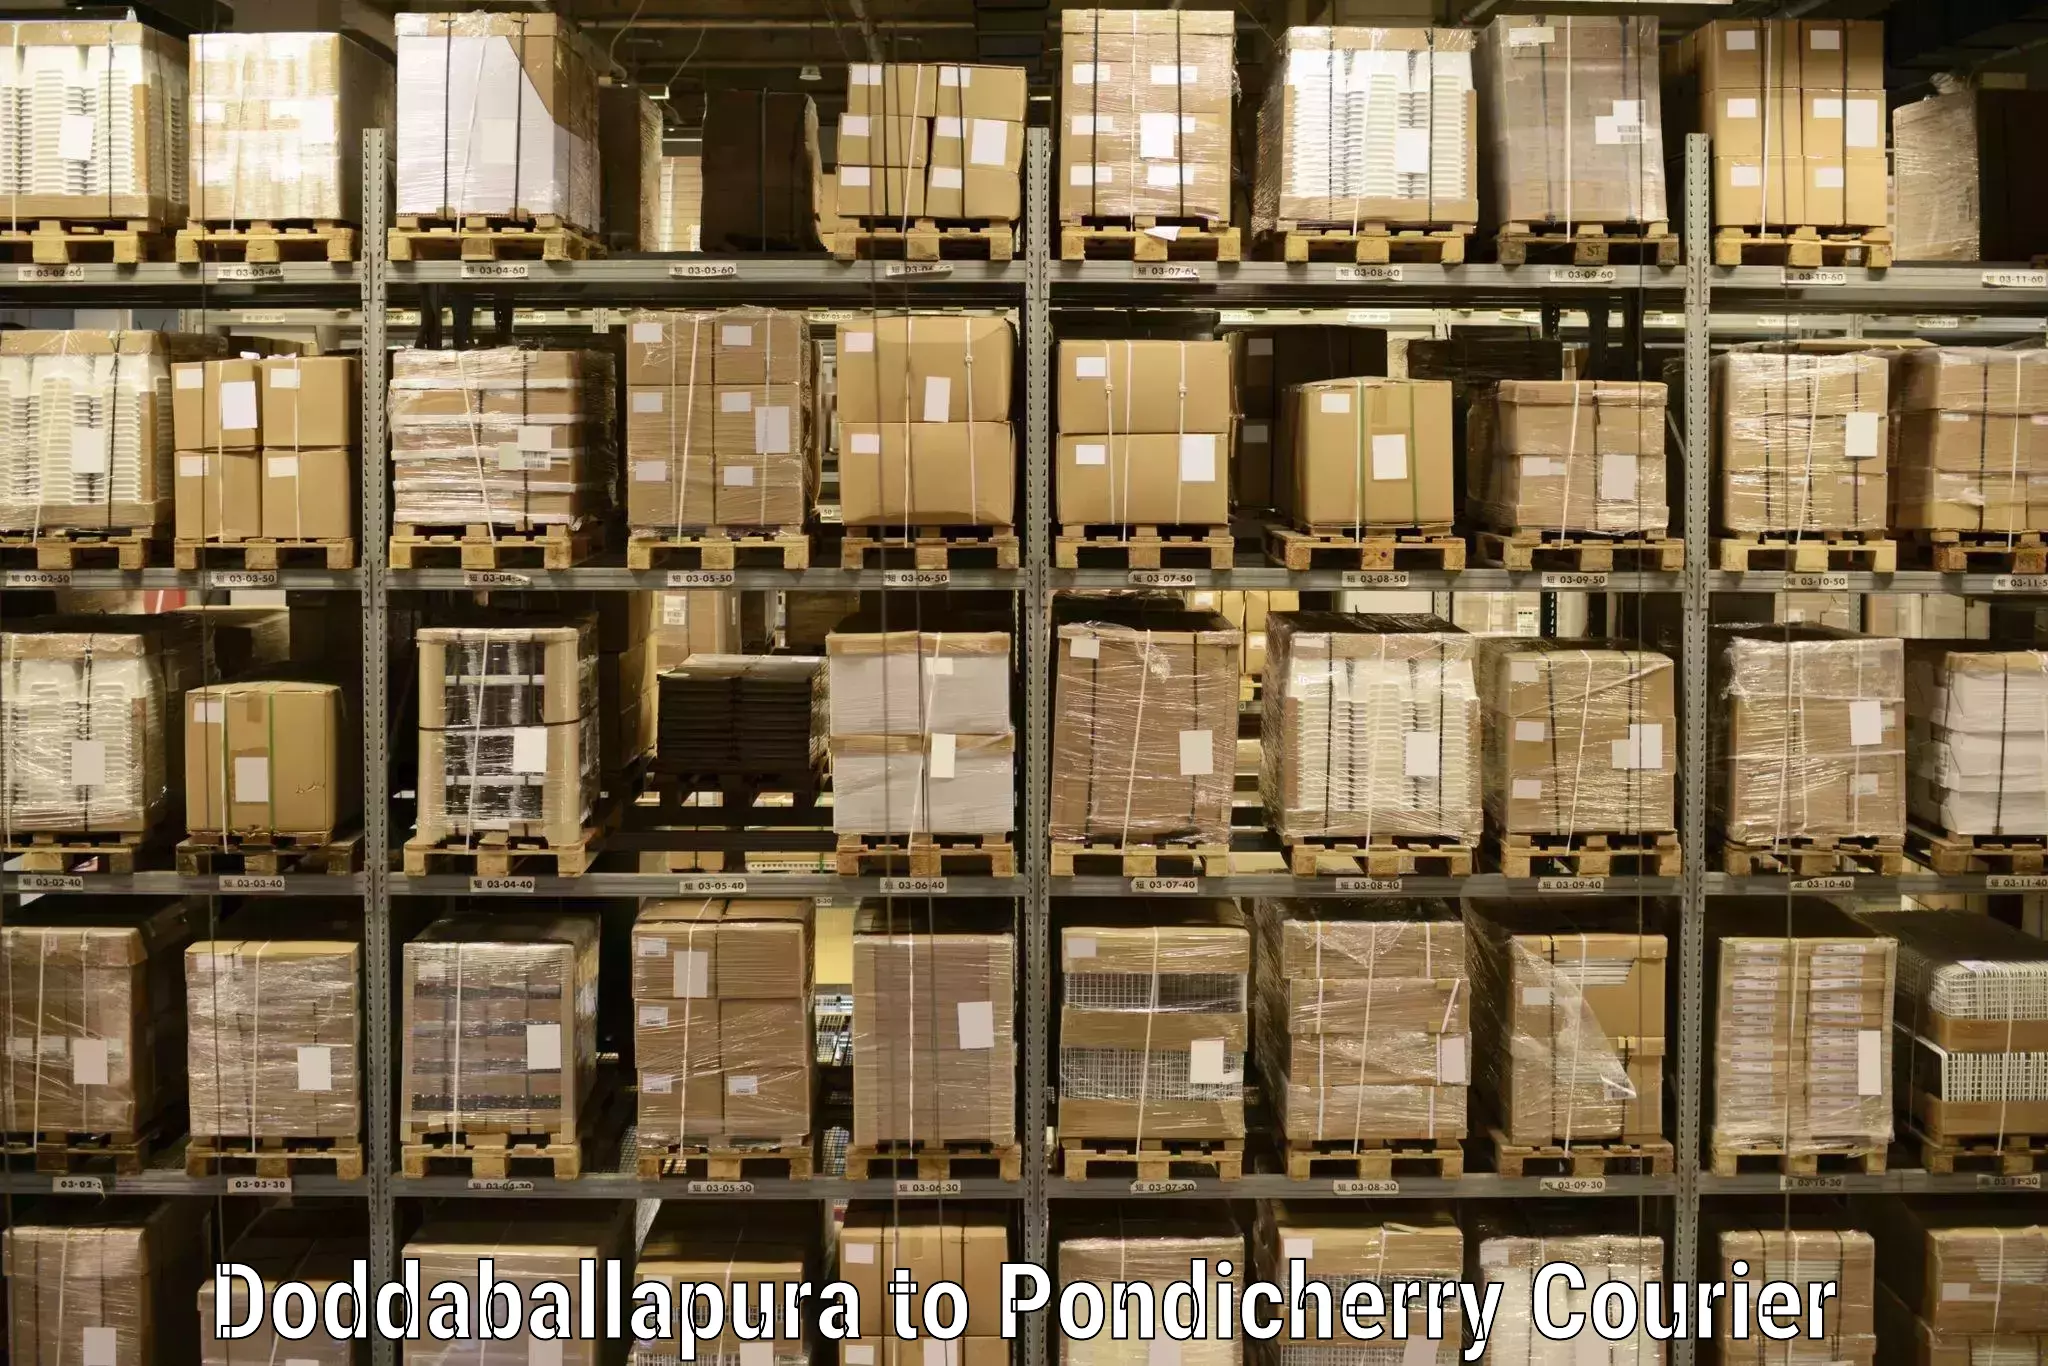 Global courier networks Doddaballapura to Karaikal